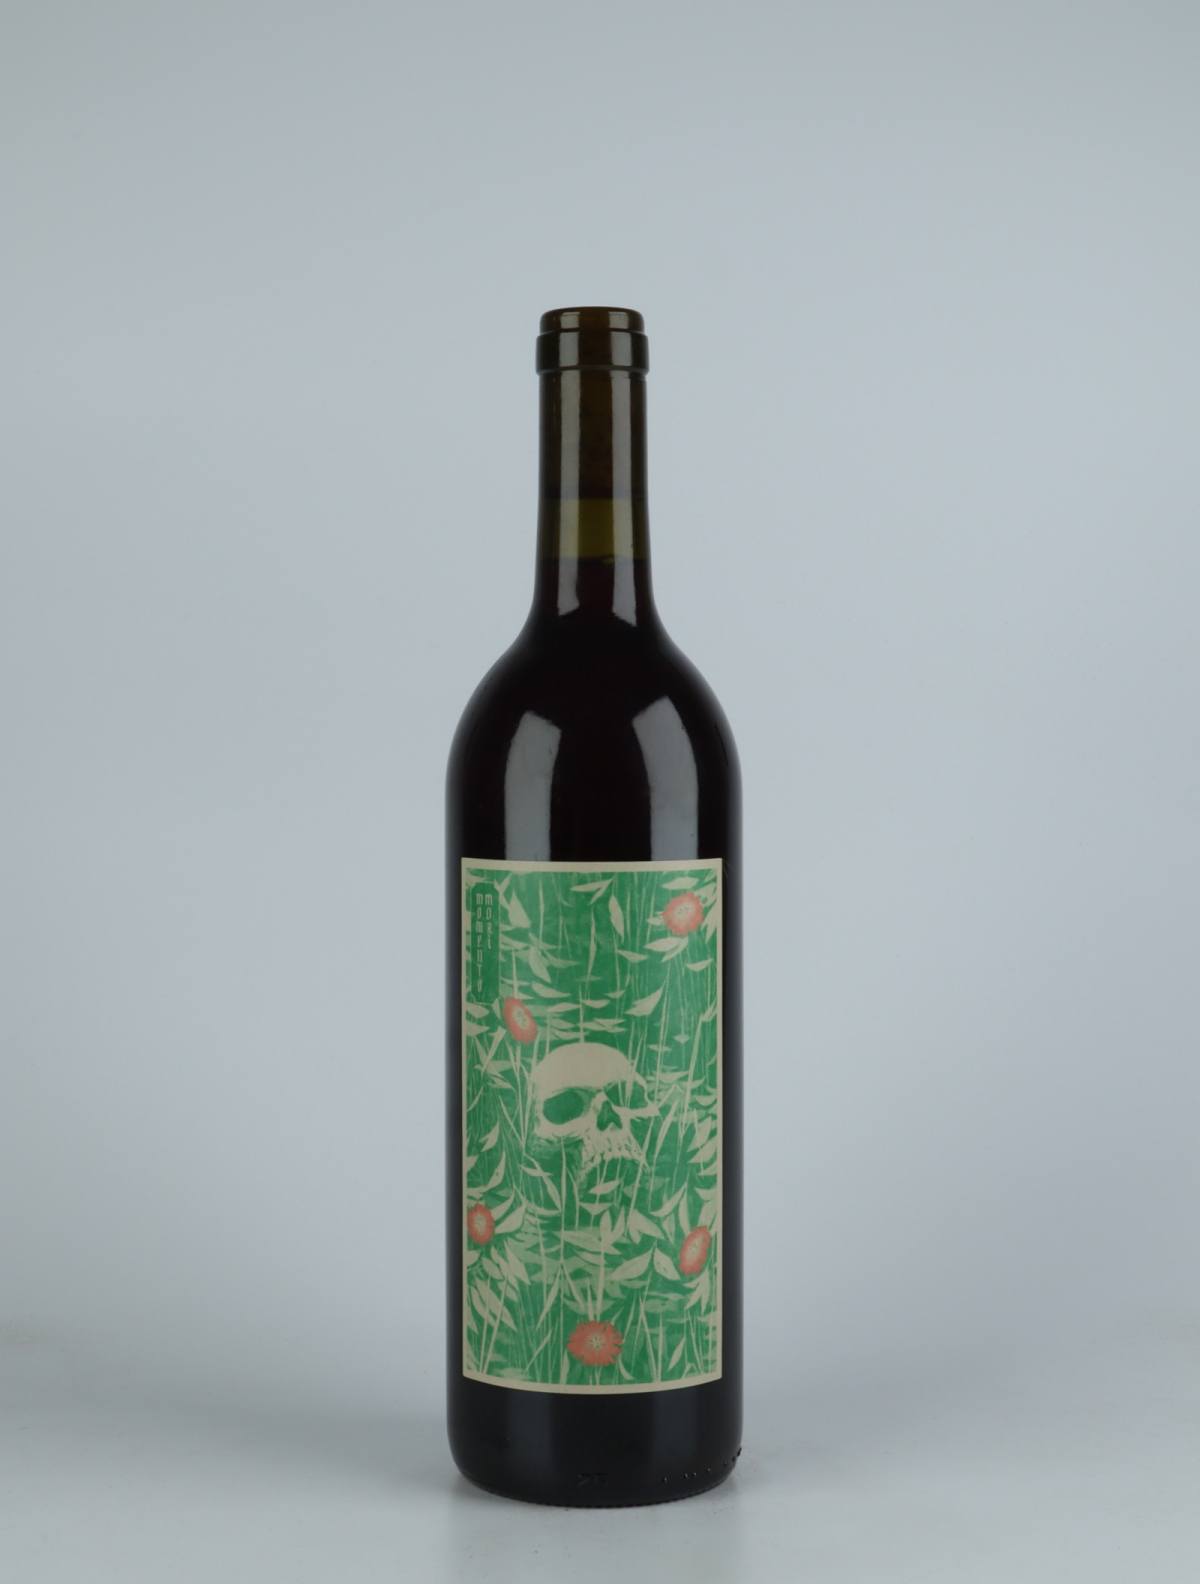 A bottle 2021 Rack & Ruin Red wine from Momento Mori, Victoria in 